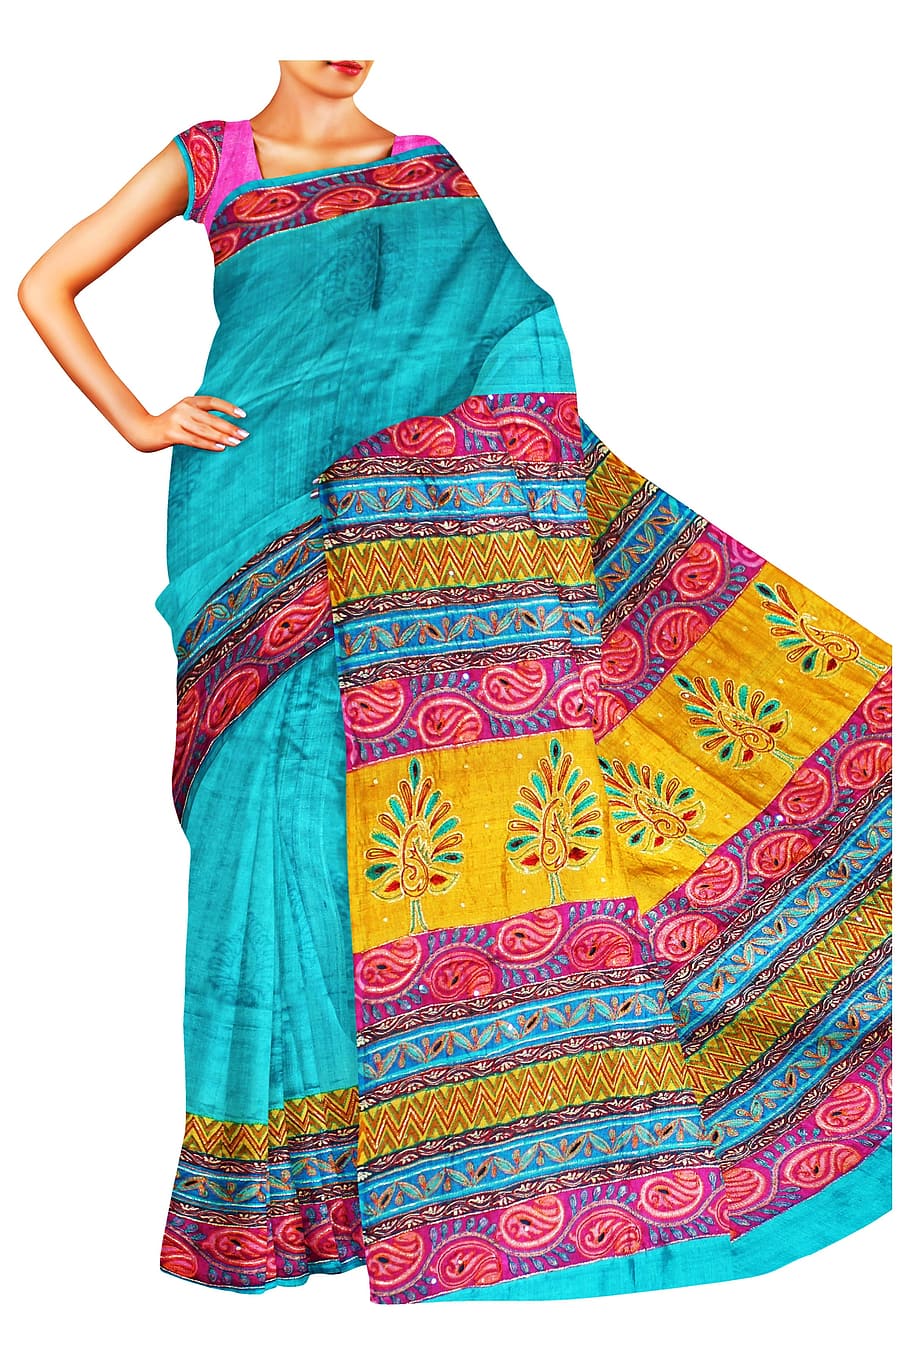 Saree, Indian, Ethnic, Clothing, Fashion, silk, dress, woman, model, cotton